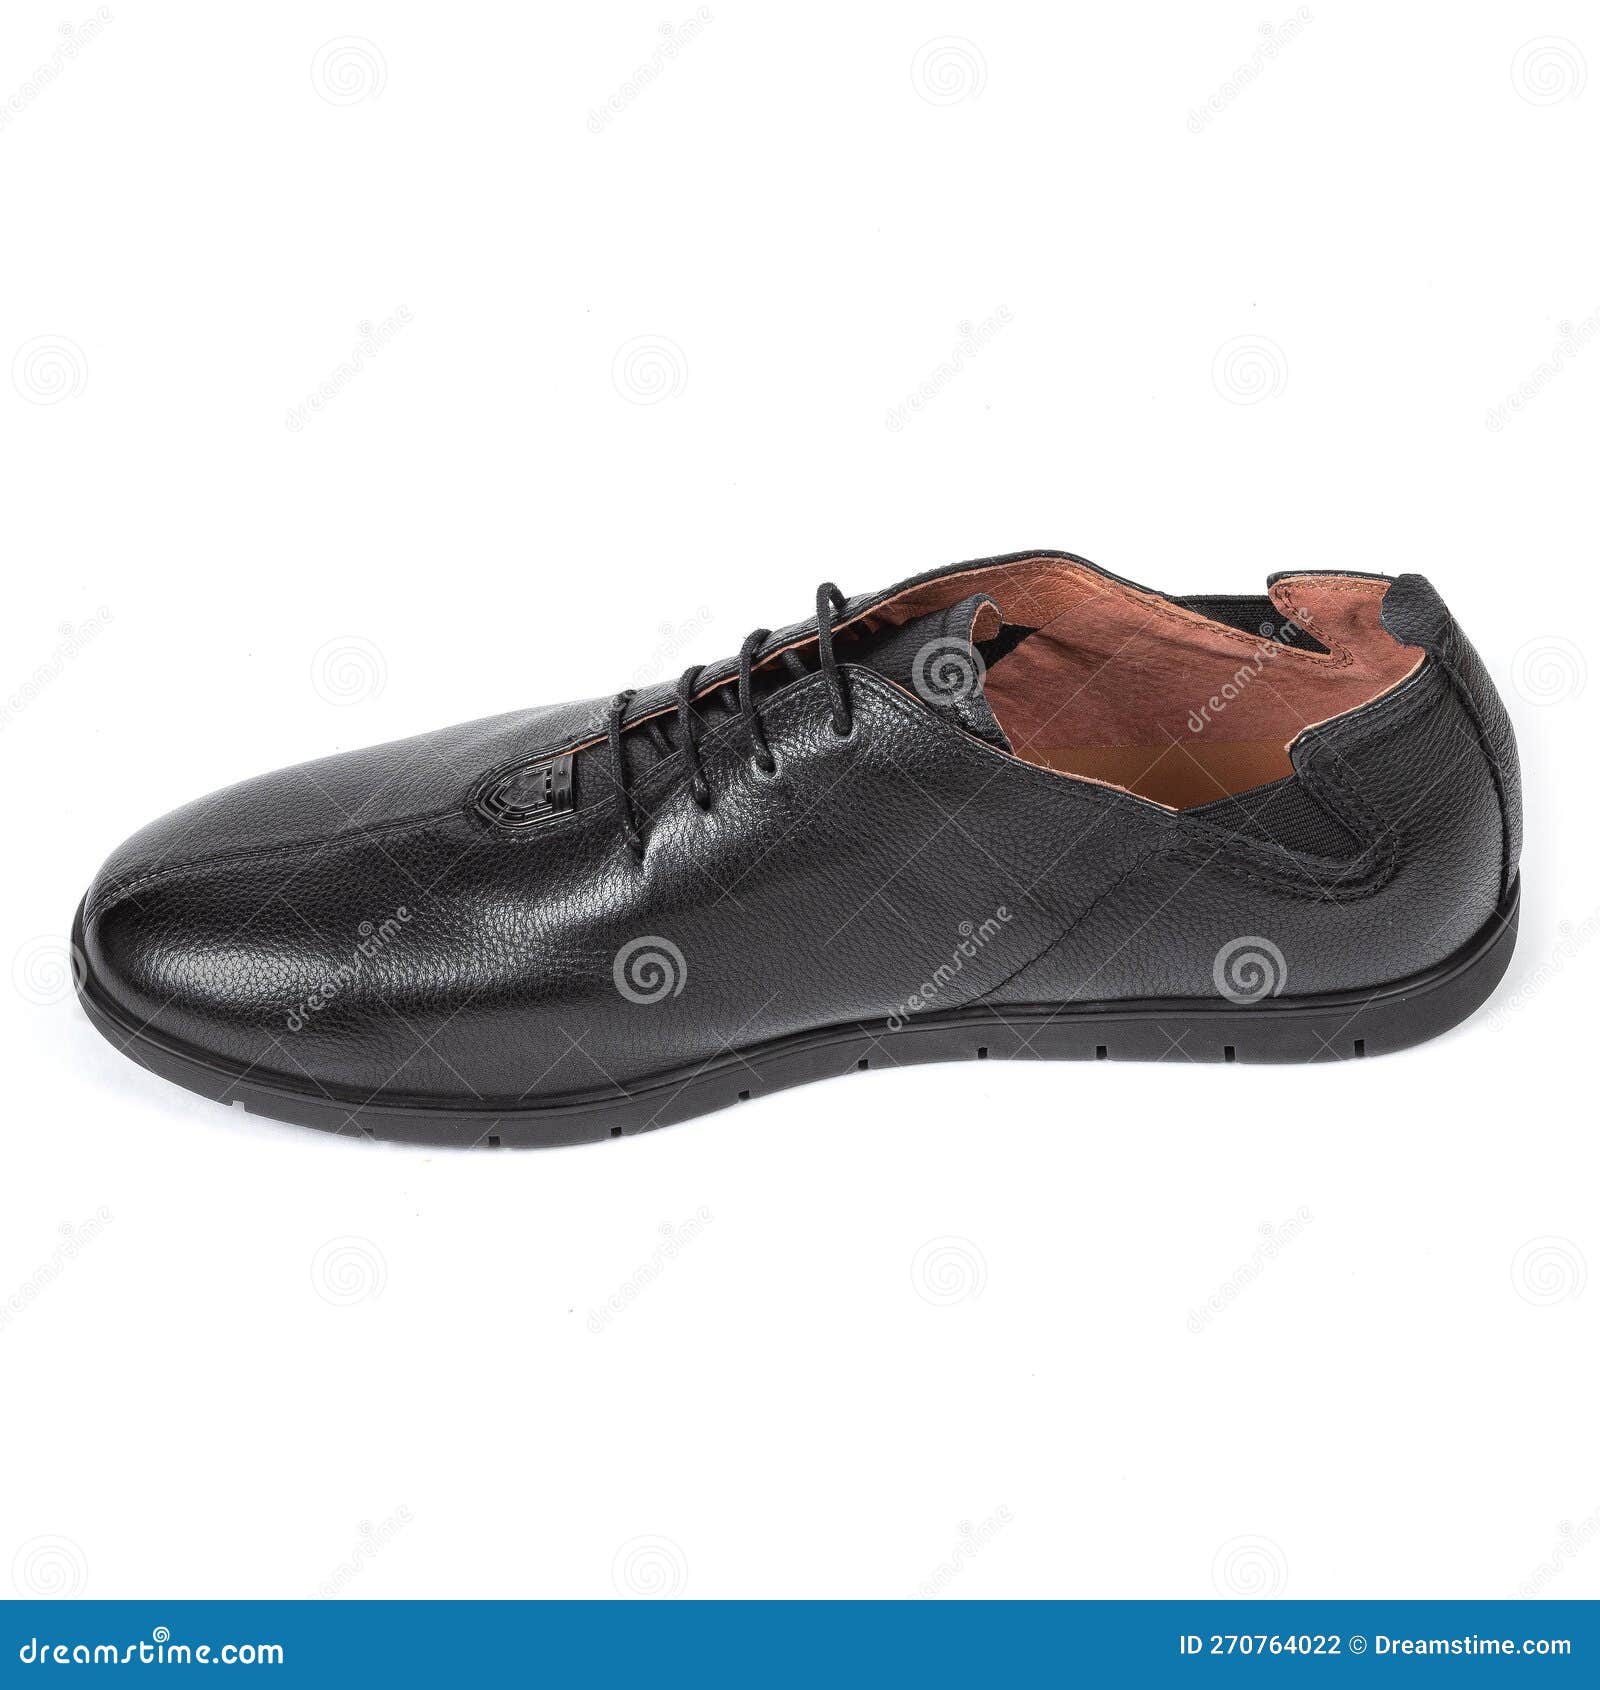 Buy Formal Shoes for Men (फॉर्मल शूज) - Metro Shoes